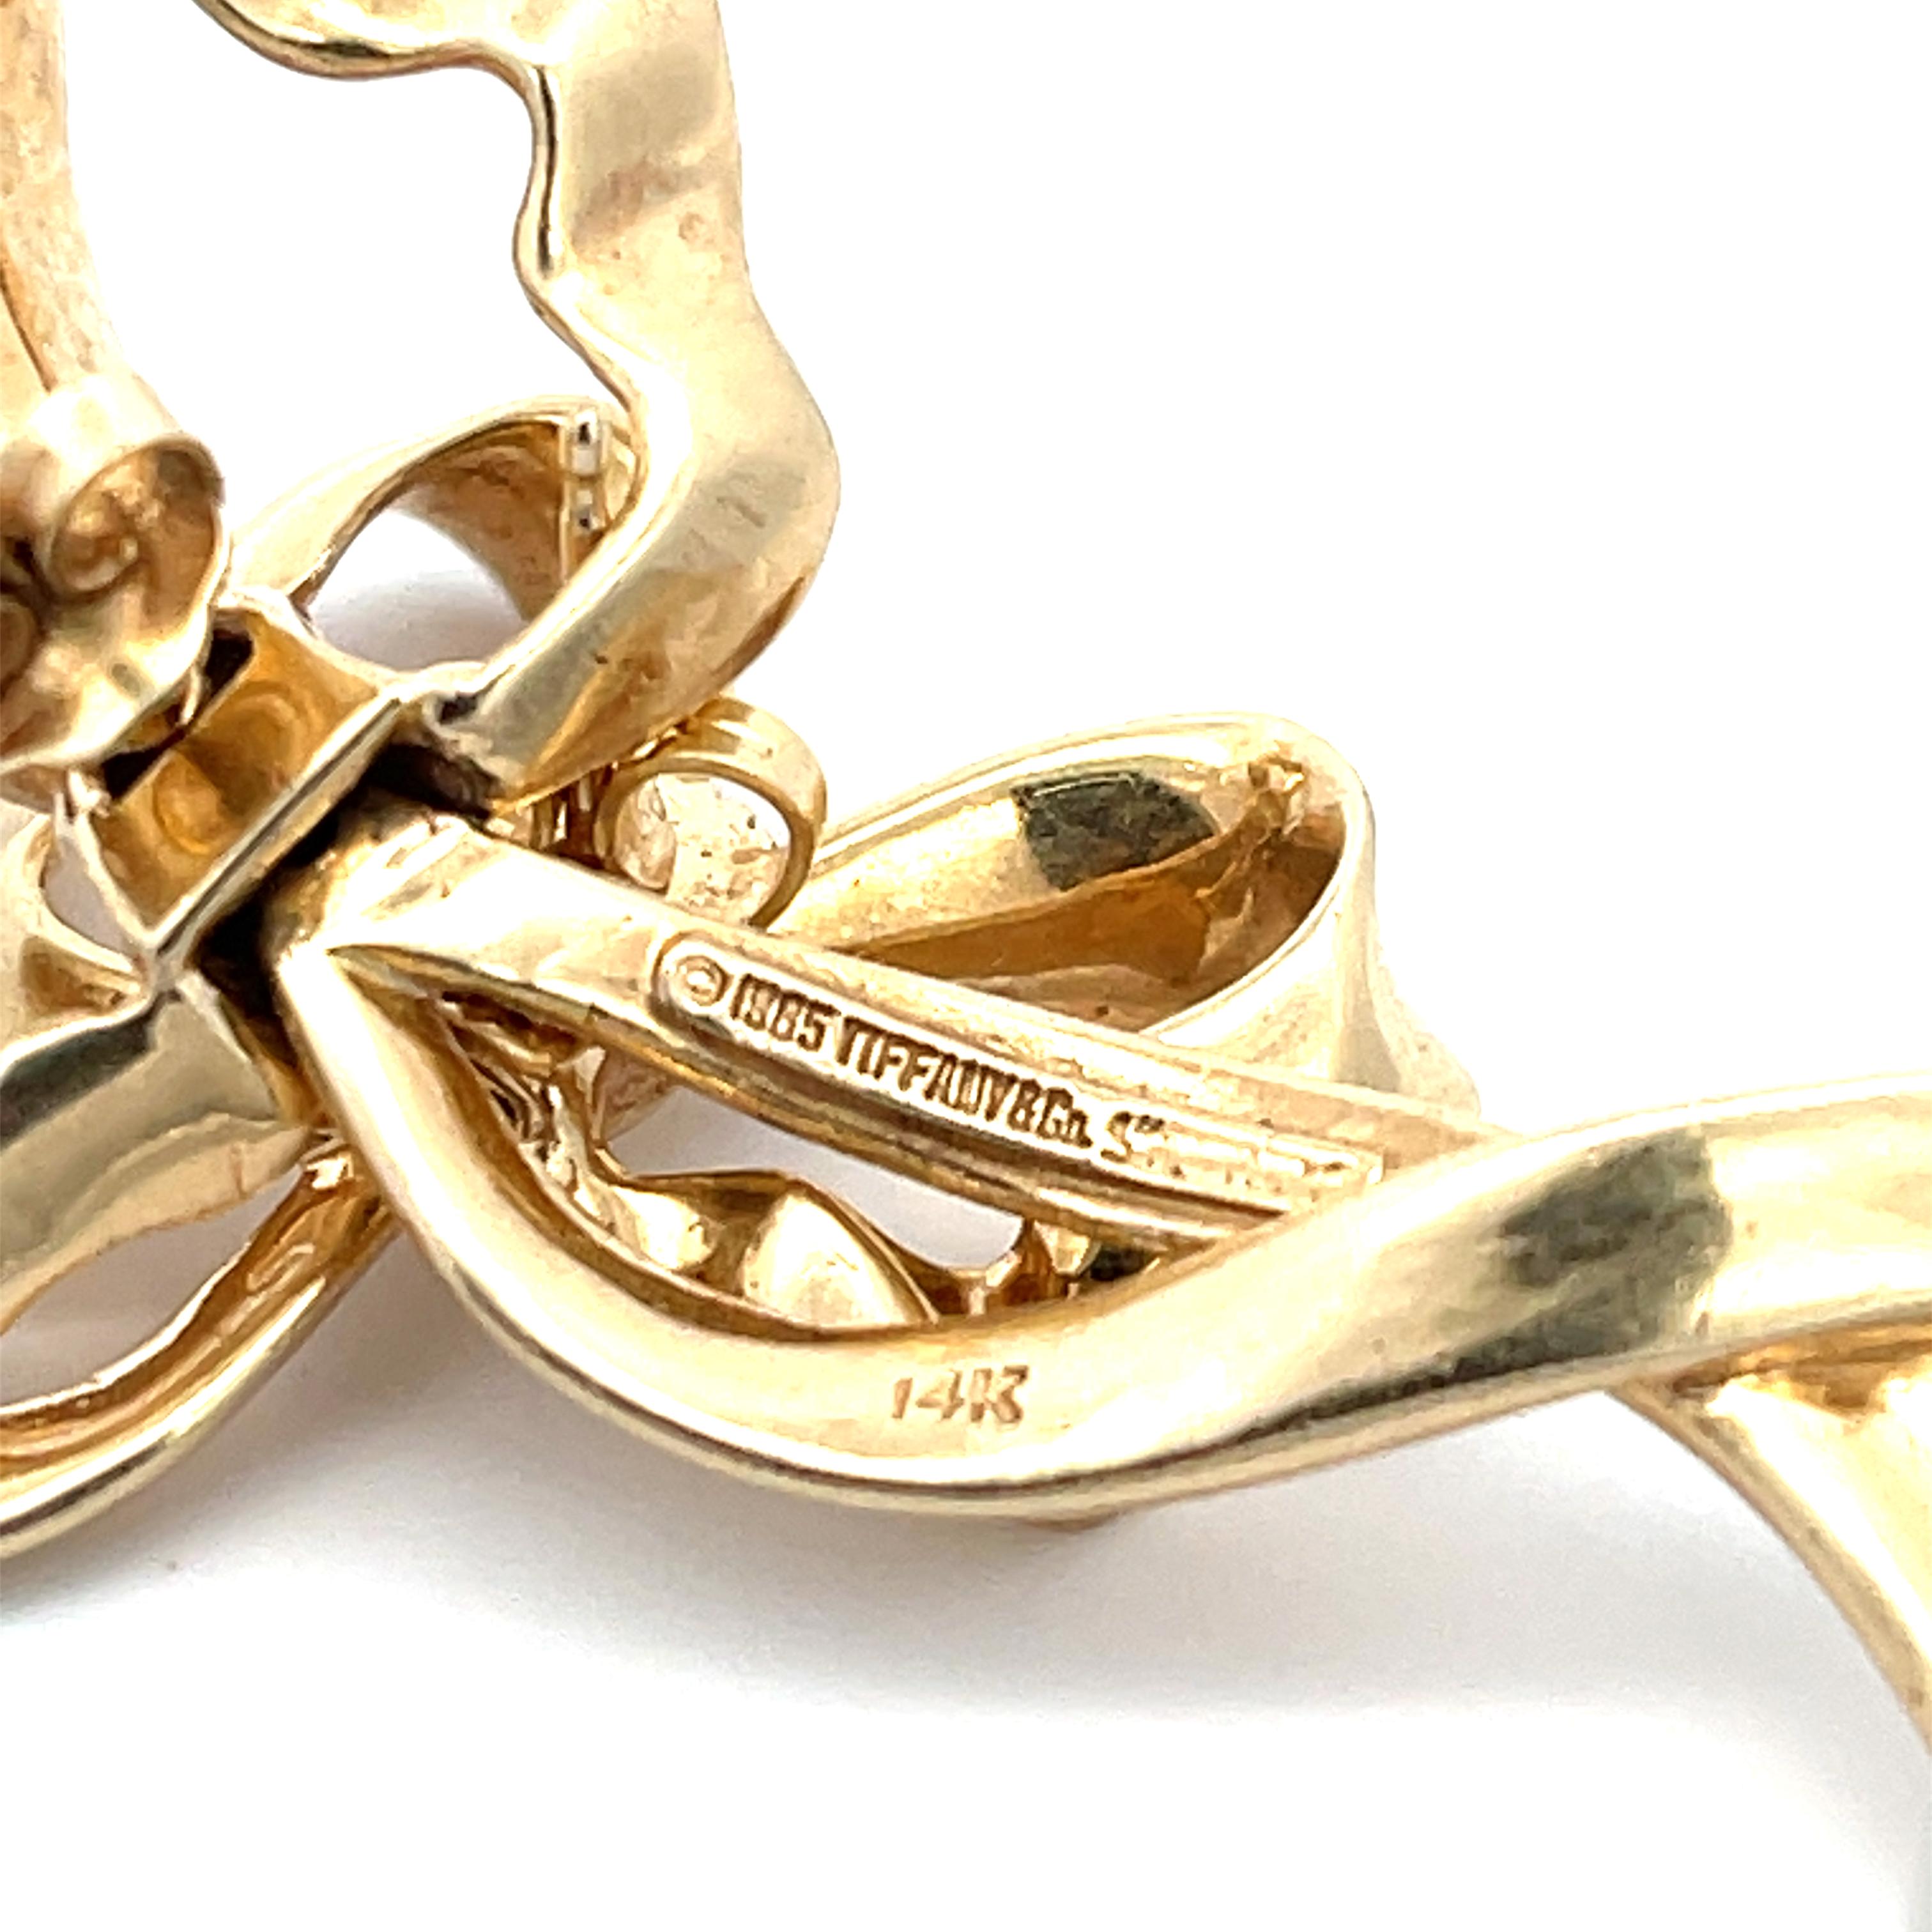 Tiffany & Co. Bow Earrings in 14K Yellow Gold. The earrings are 2.5